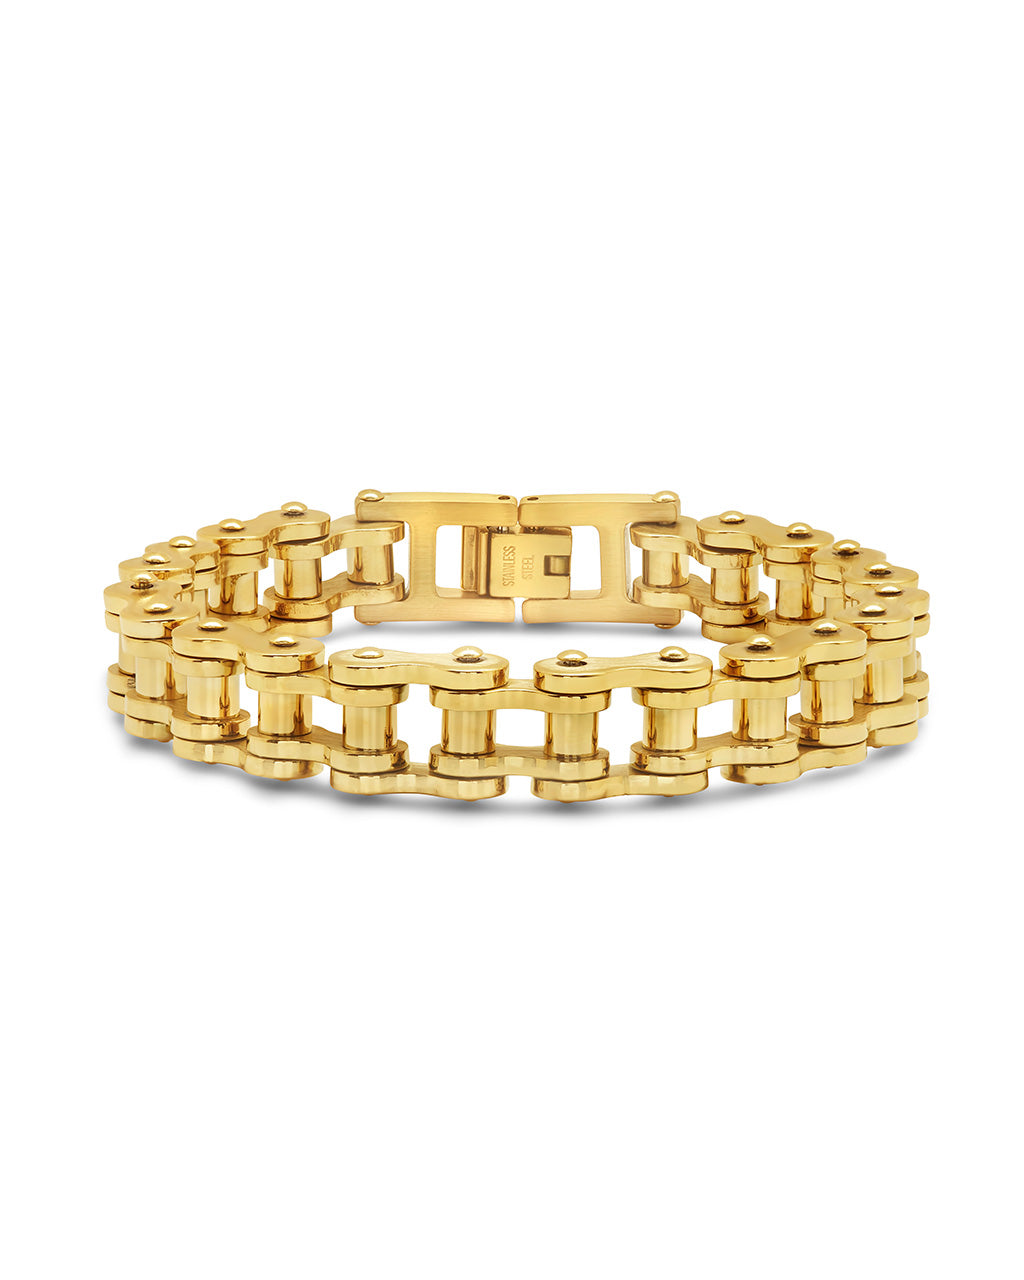 Bolt Watch Band Chain Bracelet Bracelet Sterling Forever Gold 